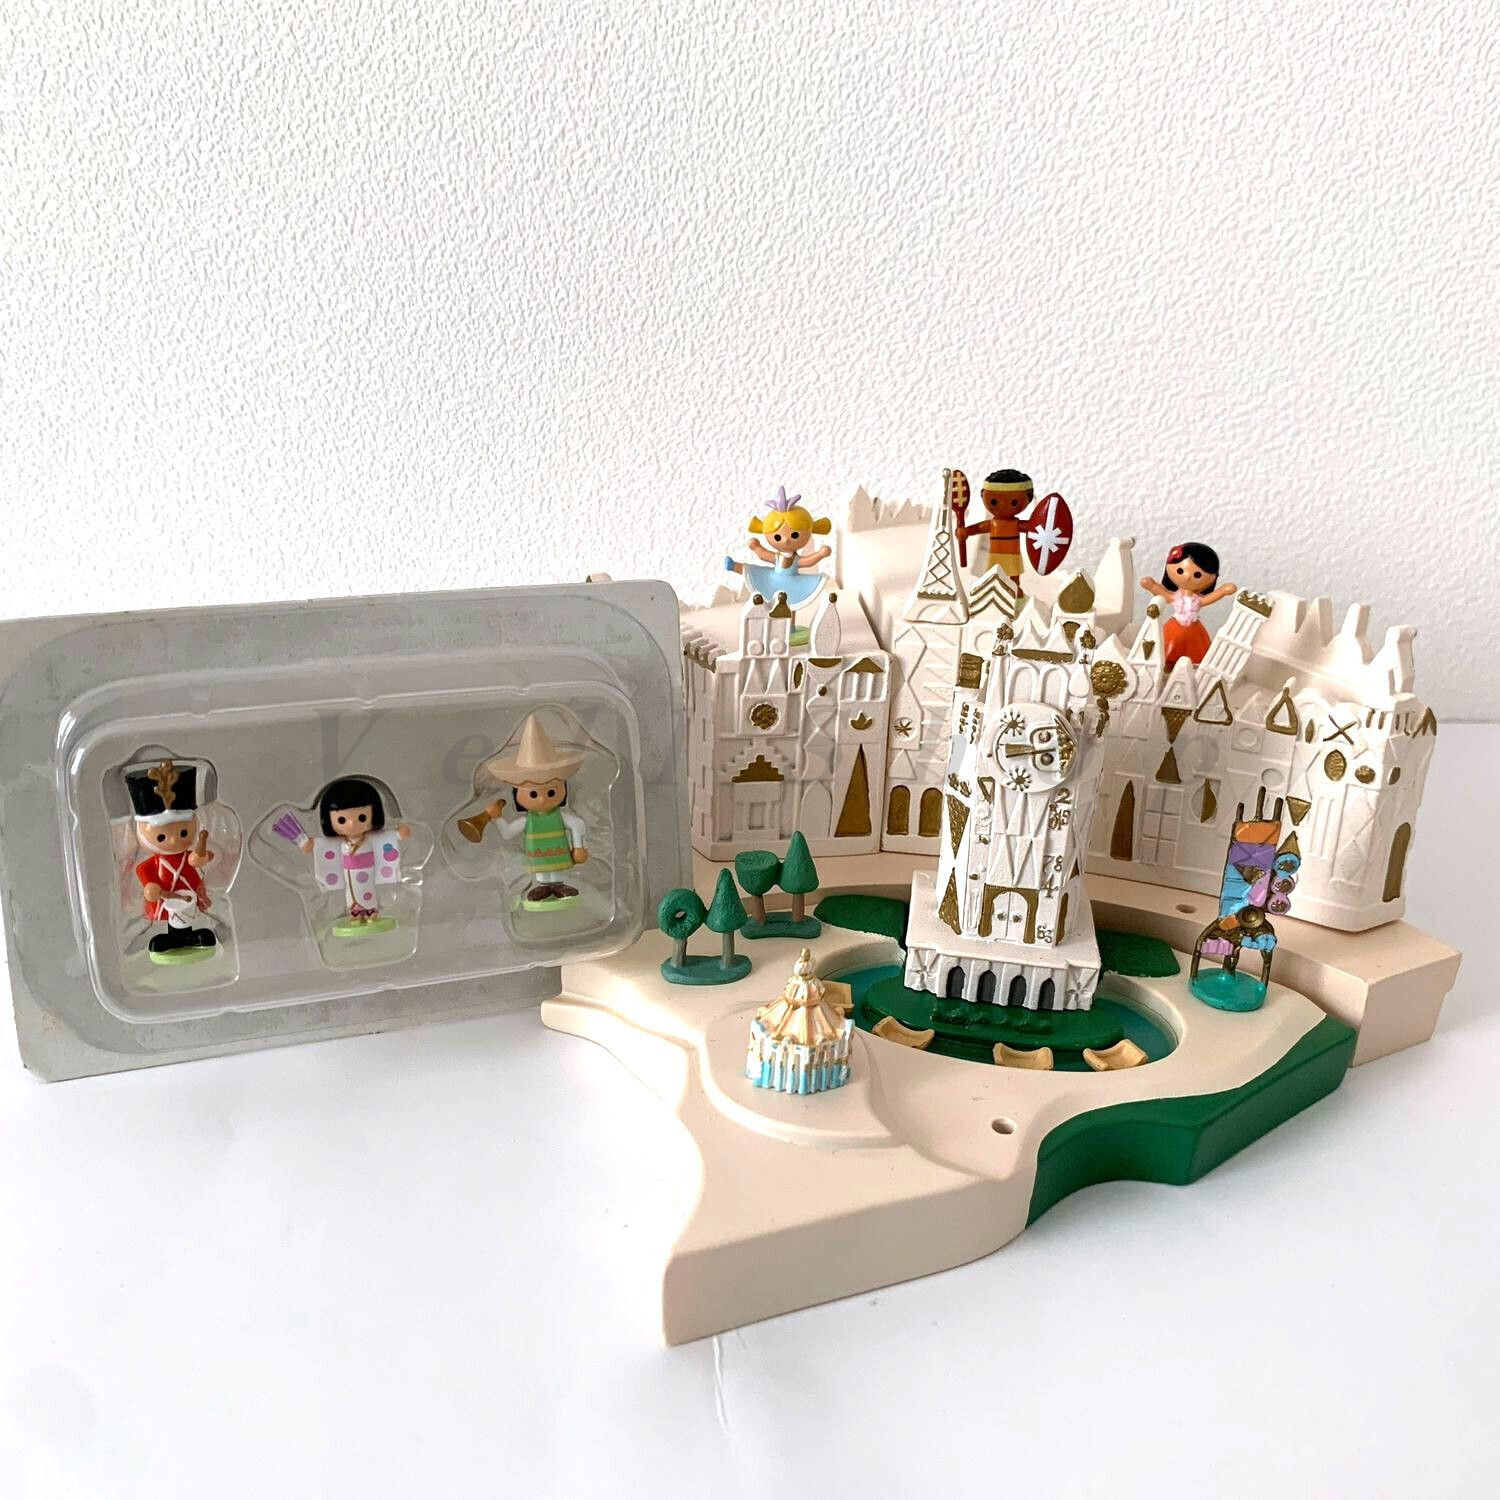 Disneyland California Fantasyland SMALL WORLD Diorama Miniature Figurine Toy 84